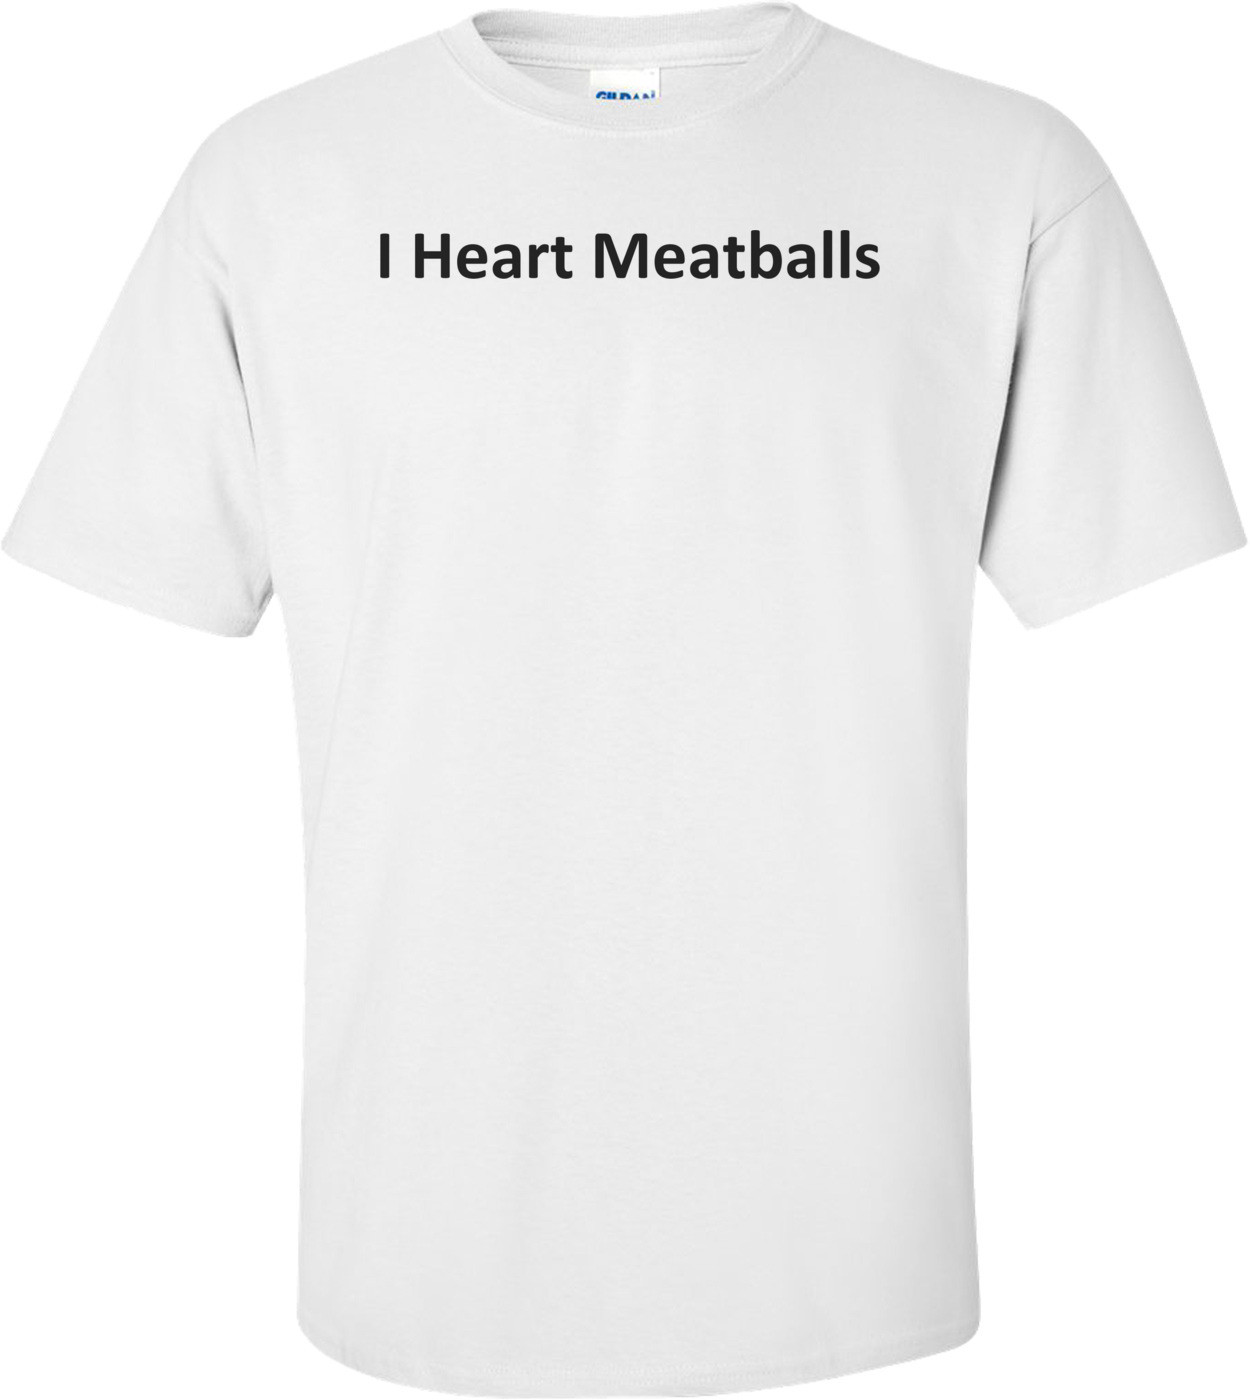 I Heart Meatballs